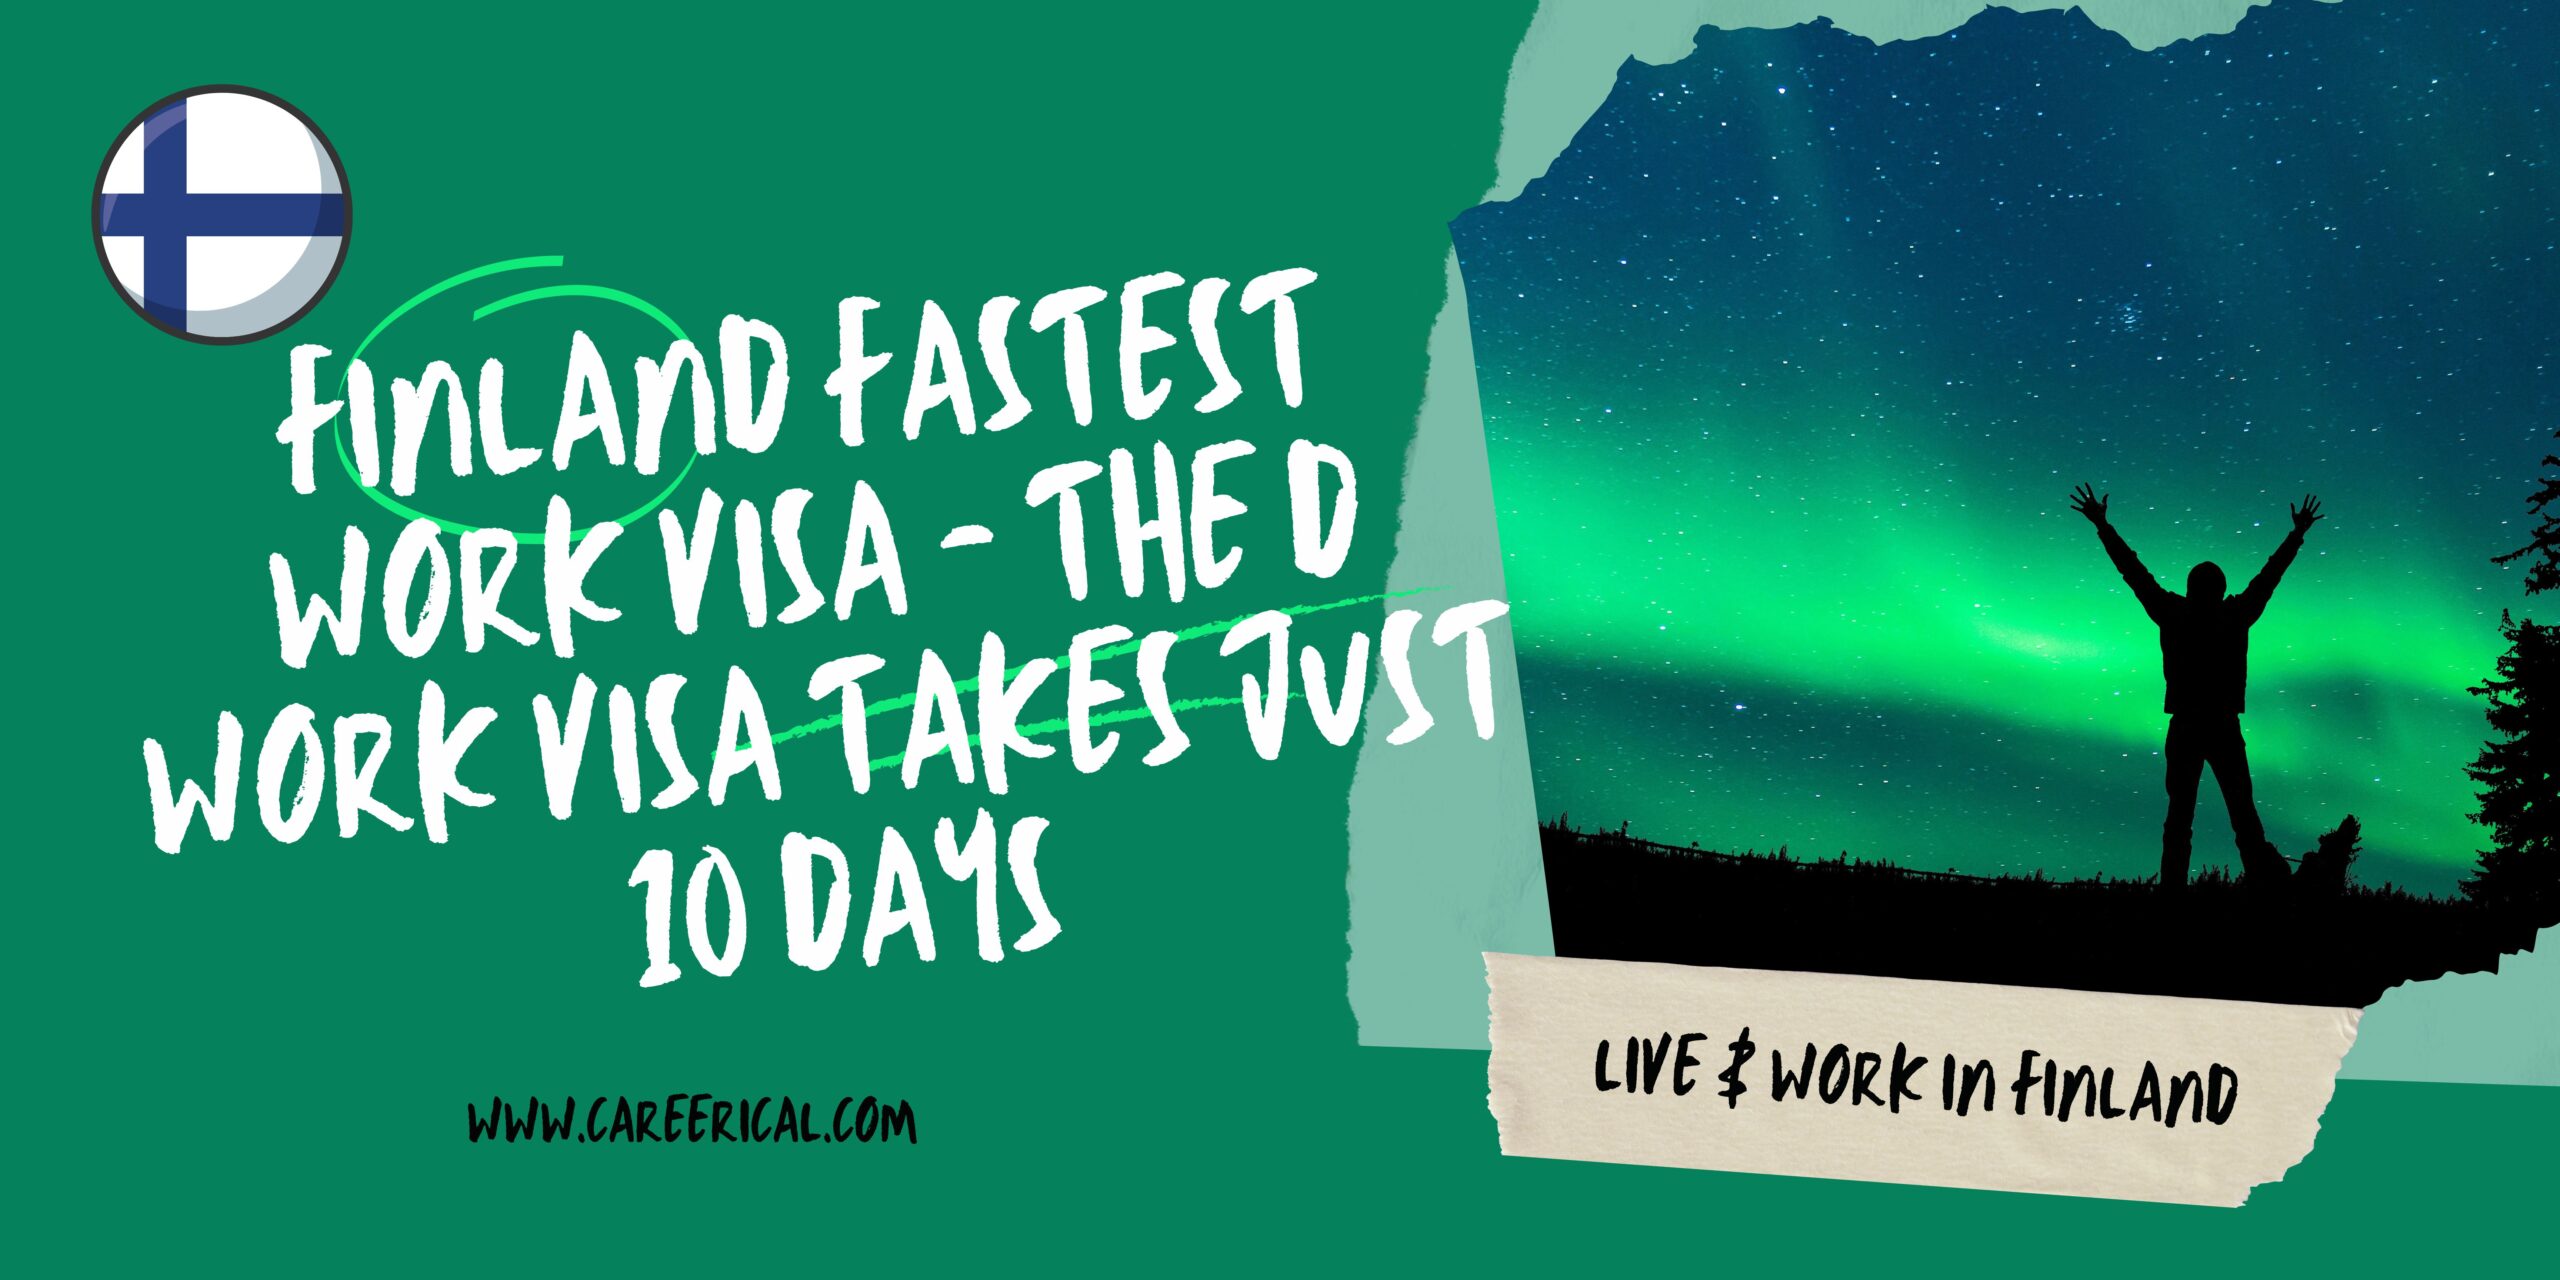 Finland Fastest Work Visa - The D Work Visa Takes Just 10 Days